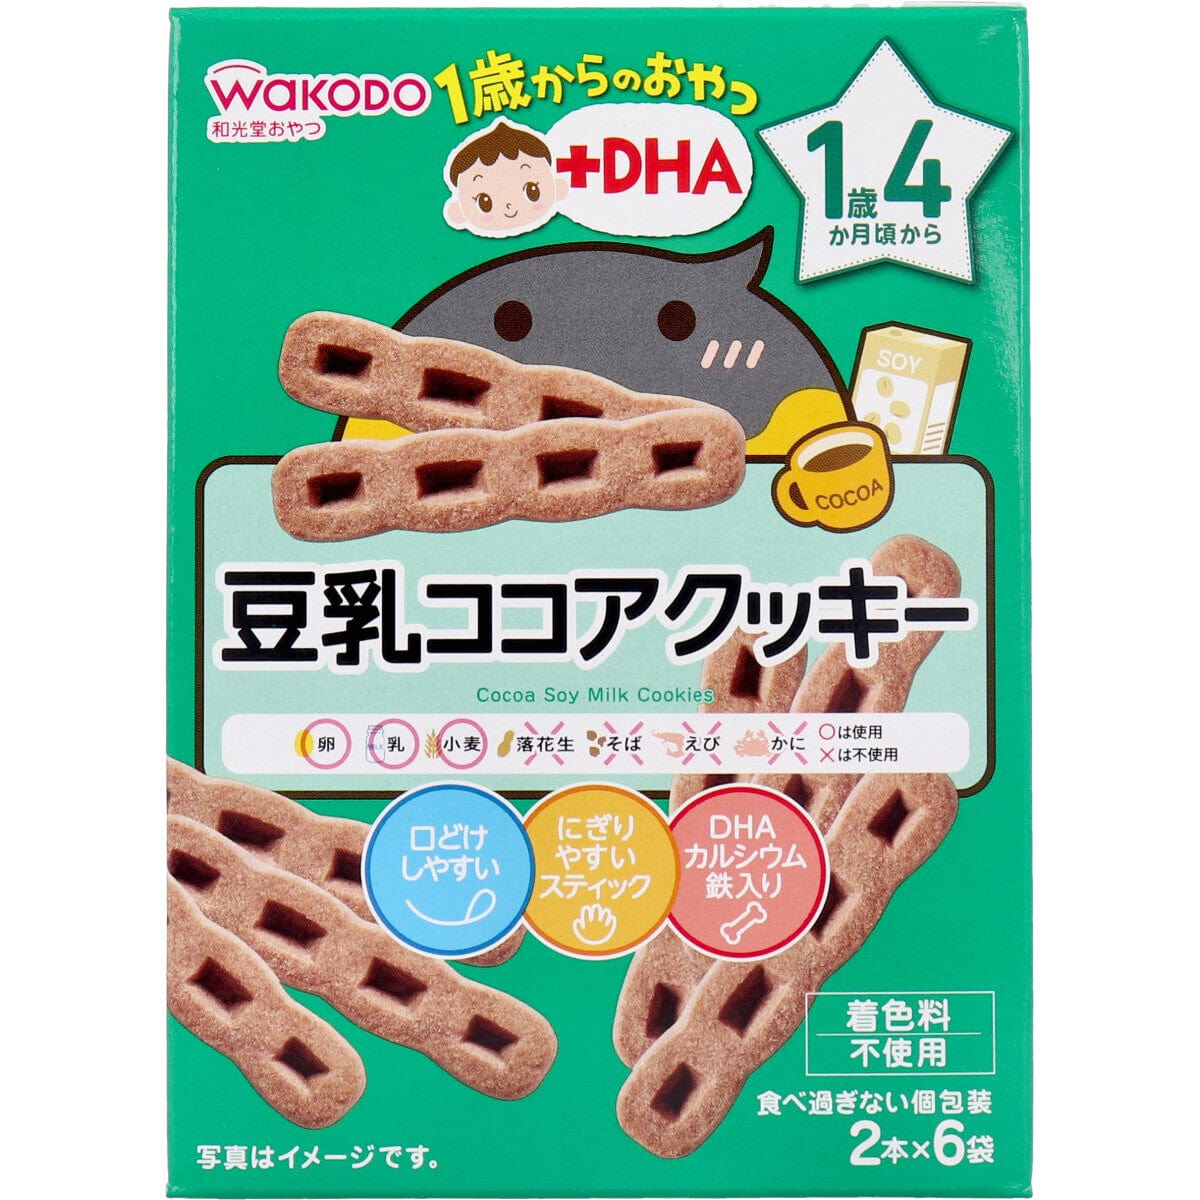 Wakodo - Baby Snacks + DHA Soy Milk Cocoa Cookies 2 bottles x 6 bags WAK1020 CherryAffairs